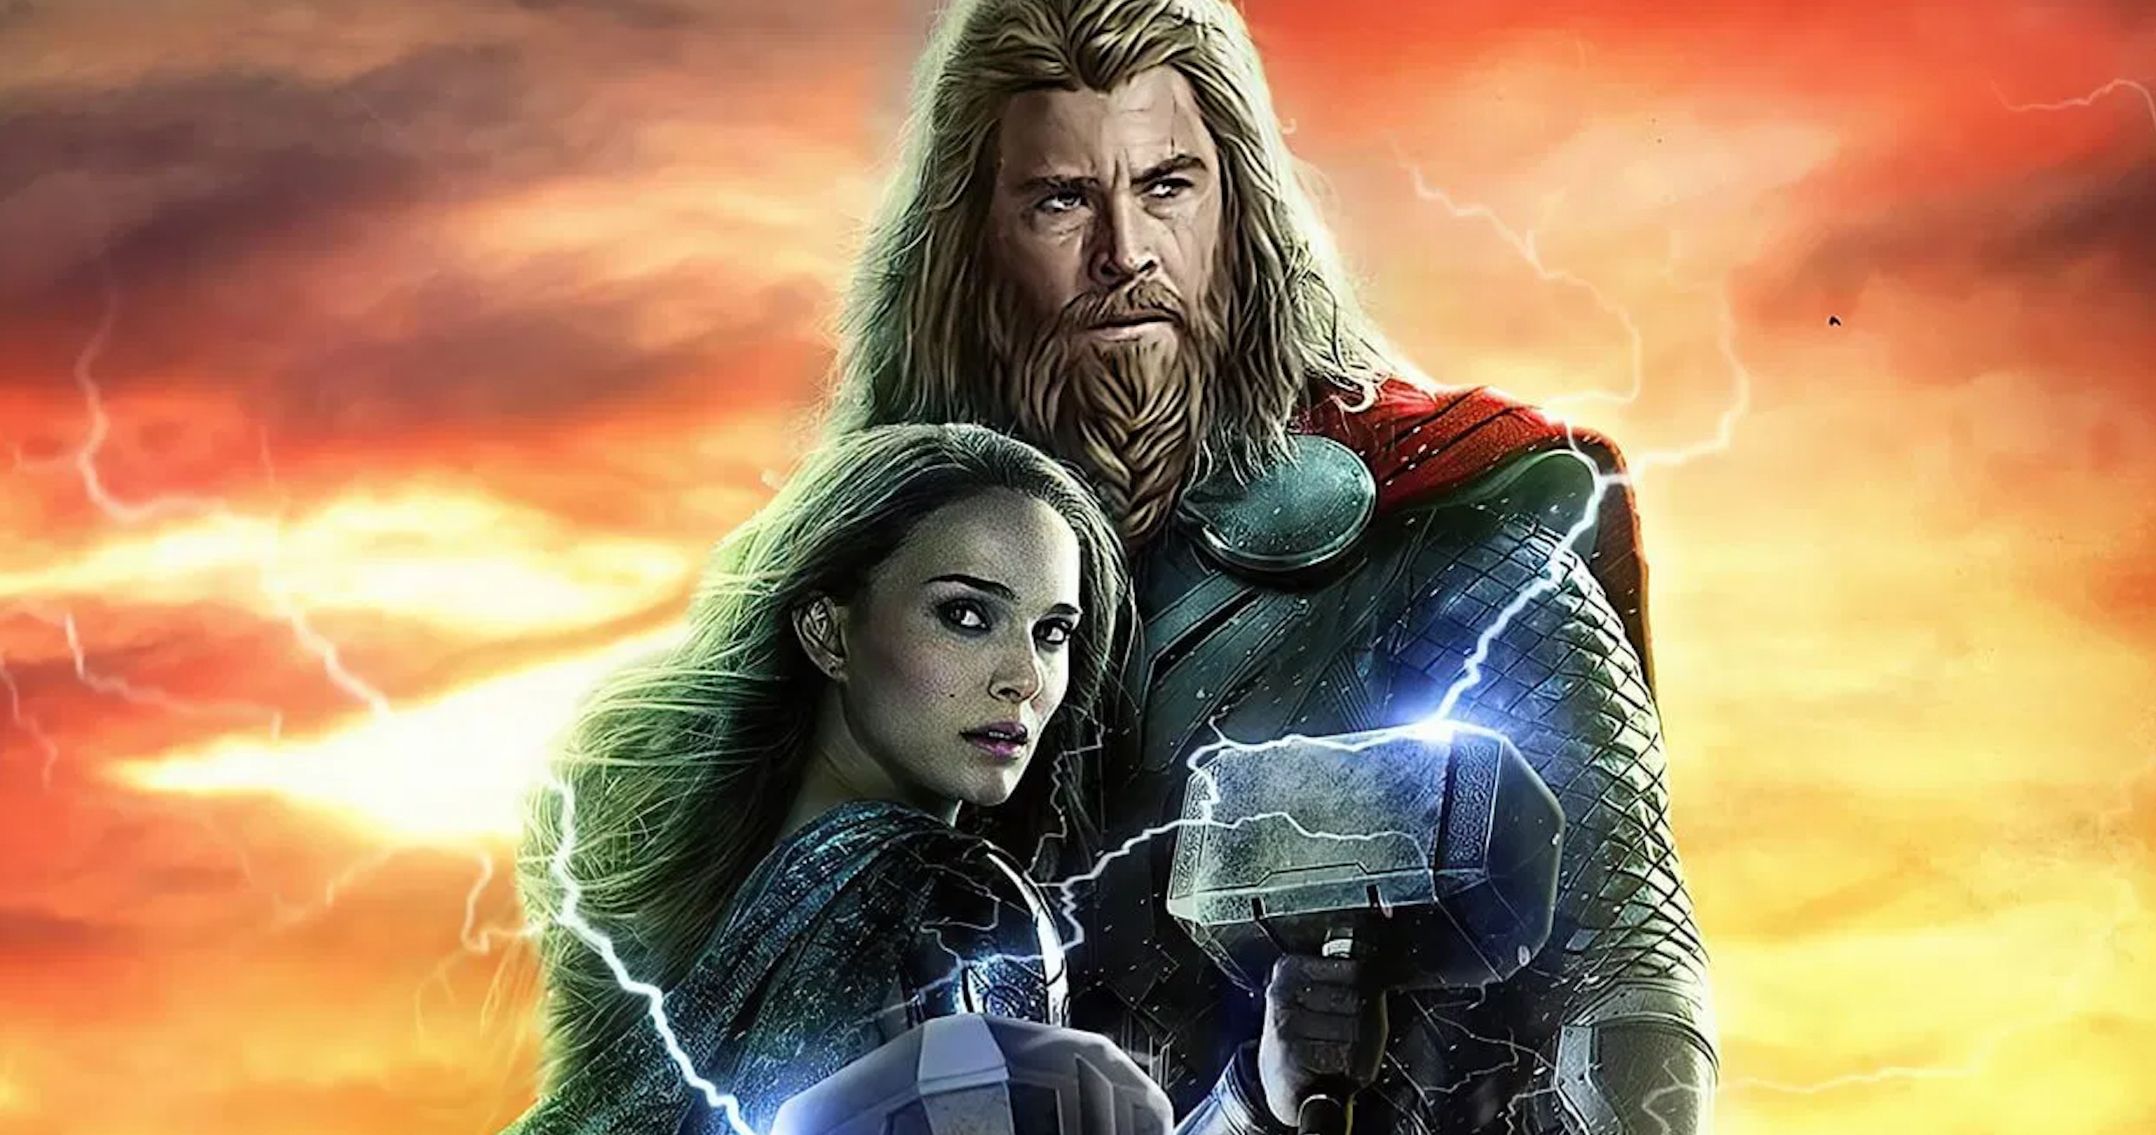 Chris Hemsworth Begins Filming Thor: Love and Thunder This Week